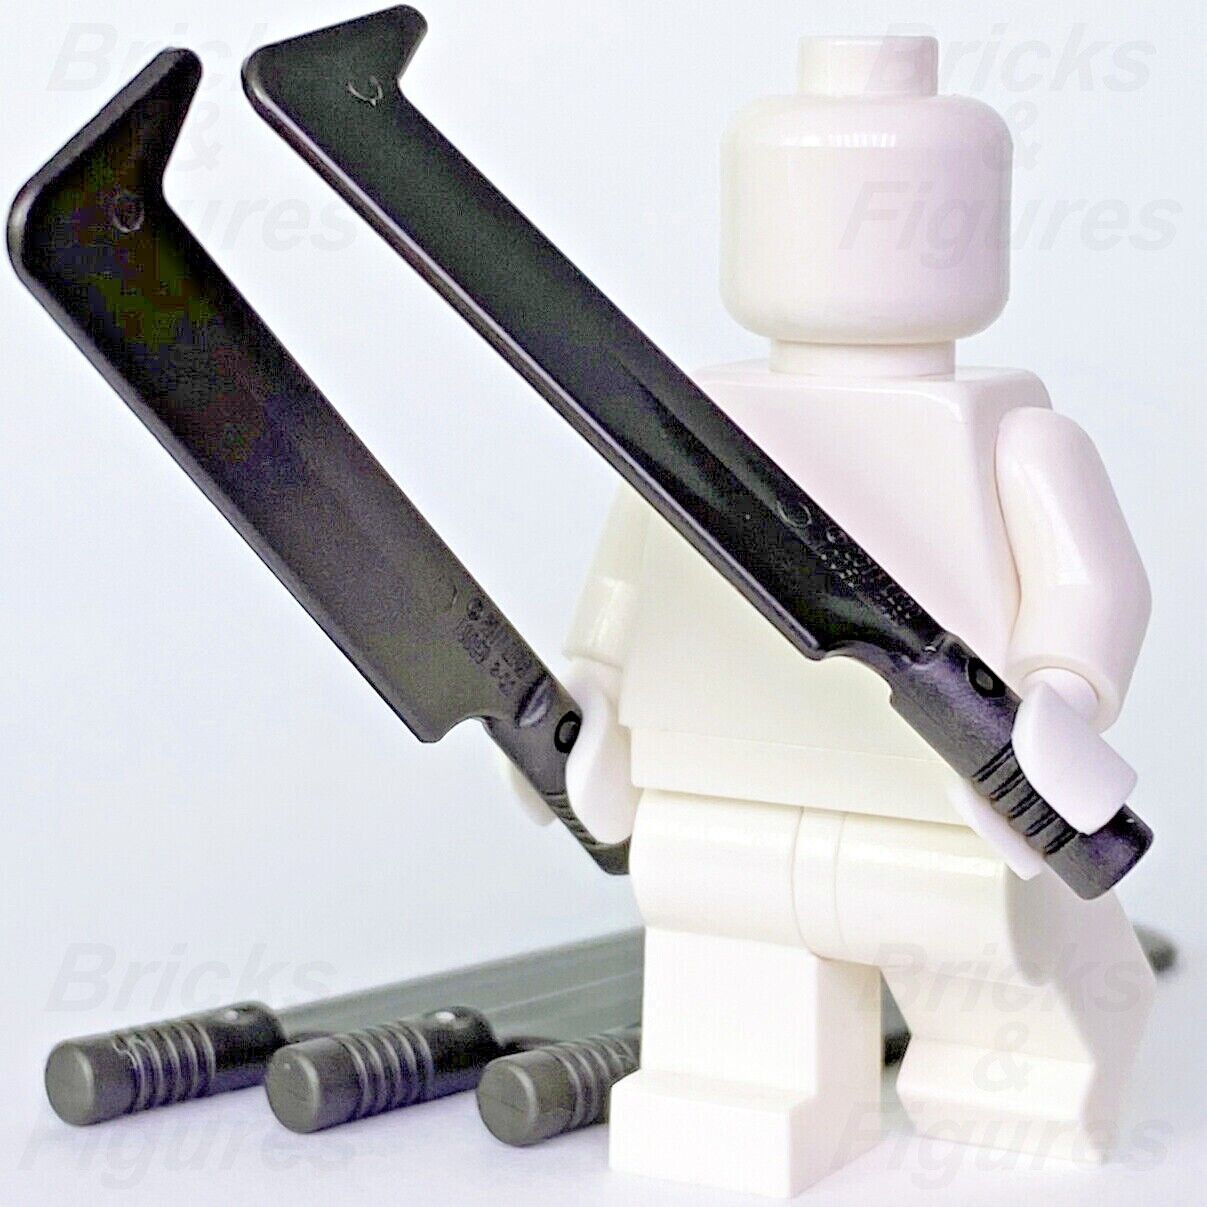 5 x LEGO Pearl Dark Grey Uruk-hai Swords Blades Minifigure Weapon Parts 10050 - Bricks & Figures